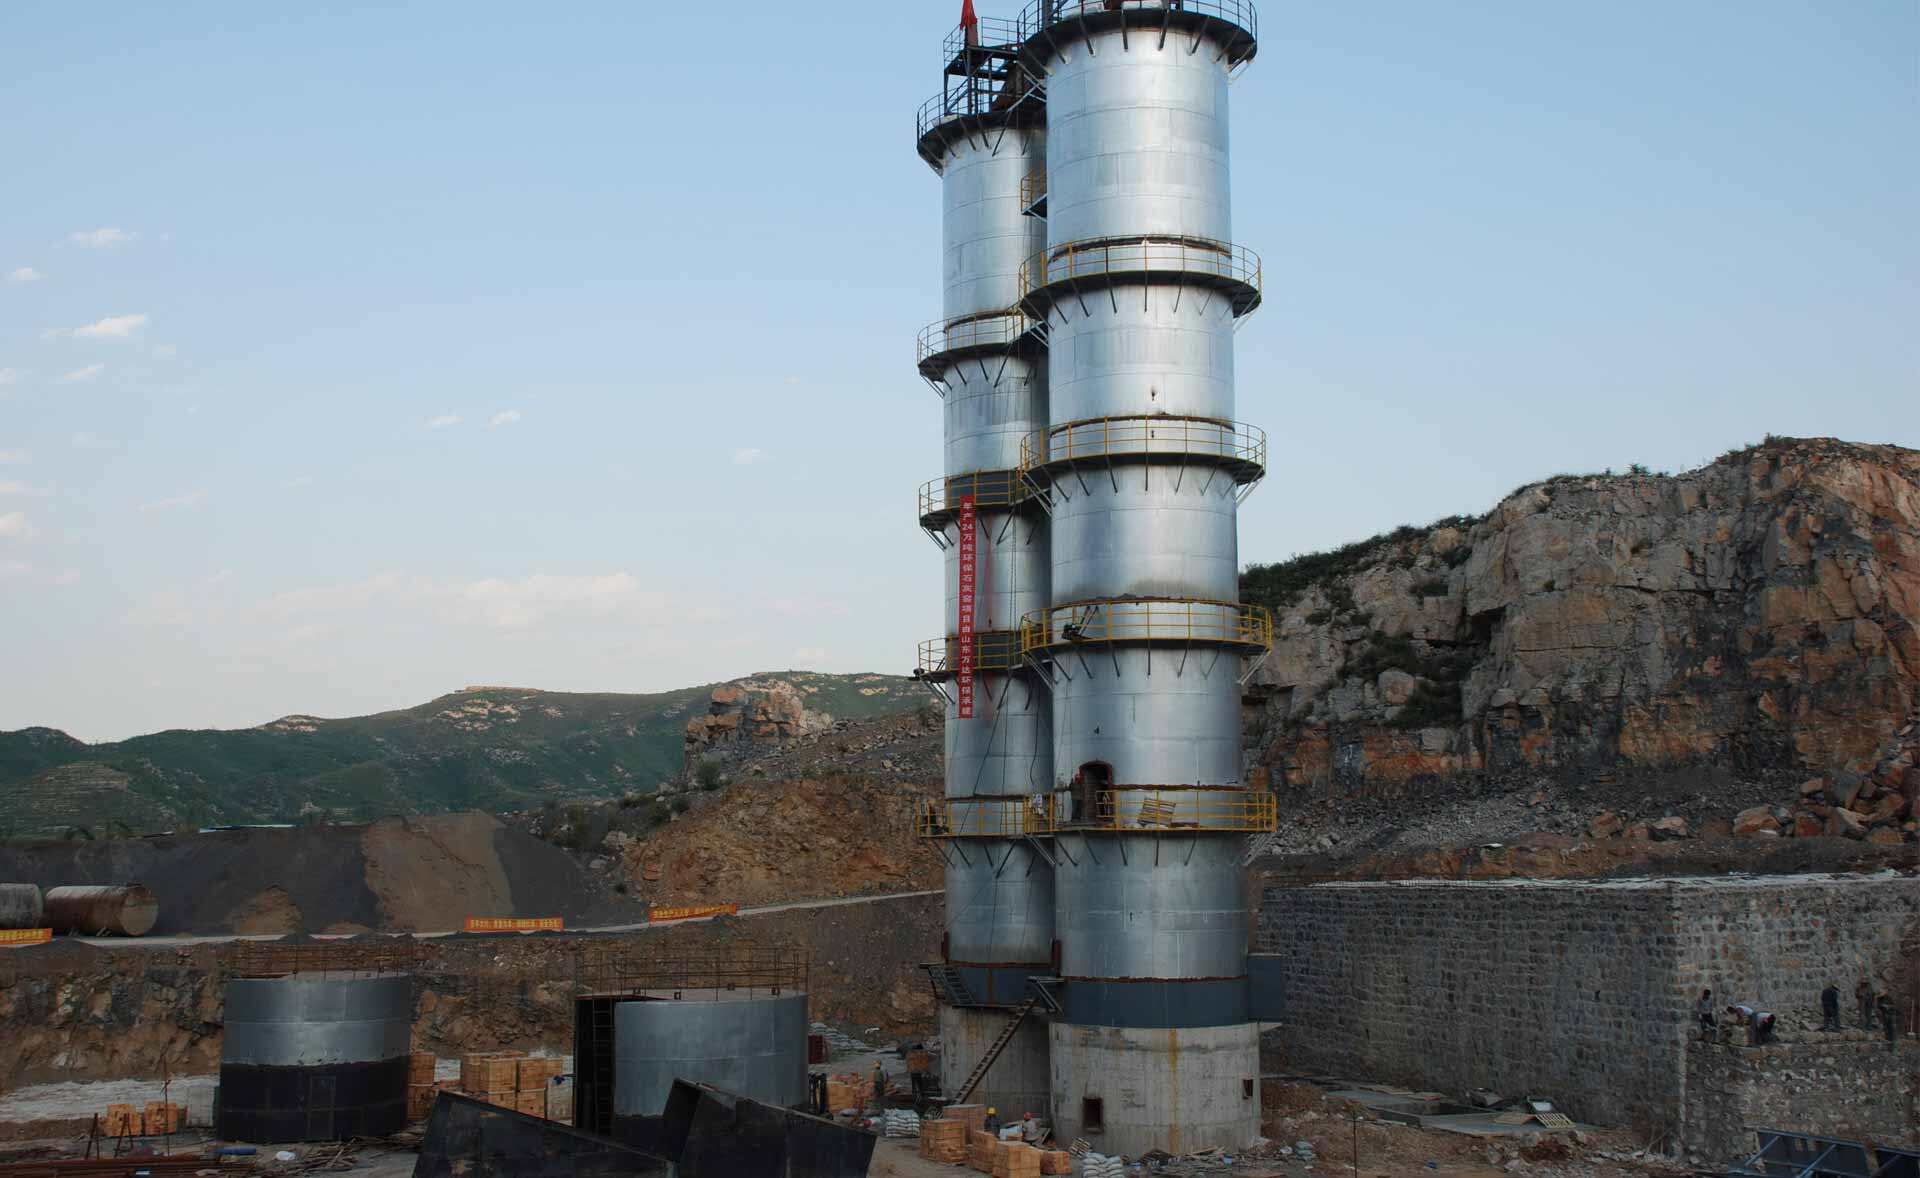 Jiangsu 600t twin-shaft lime kiln Project